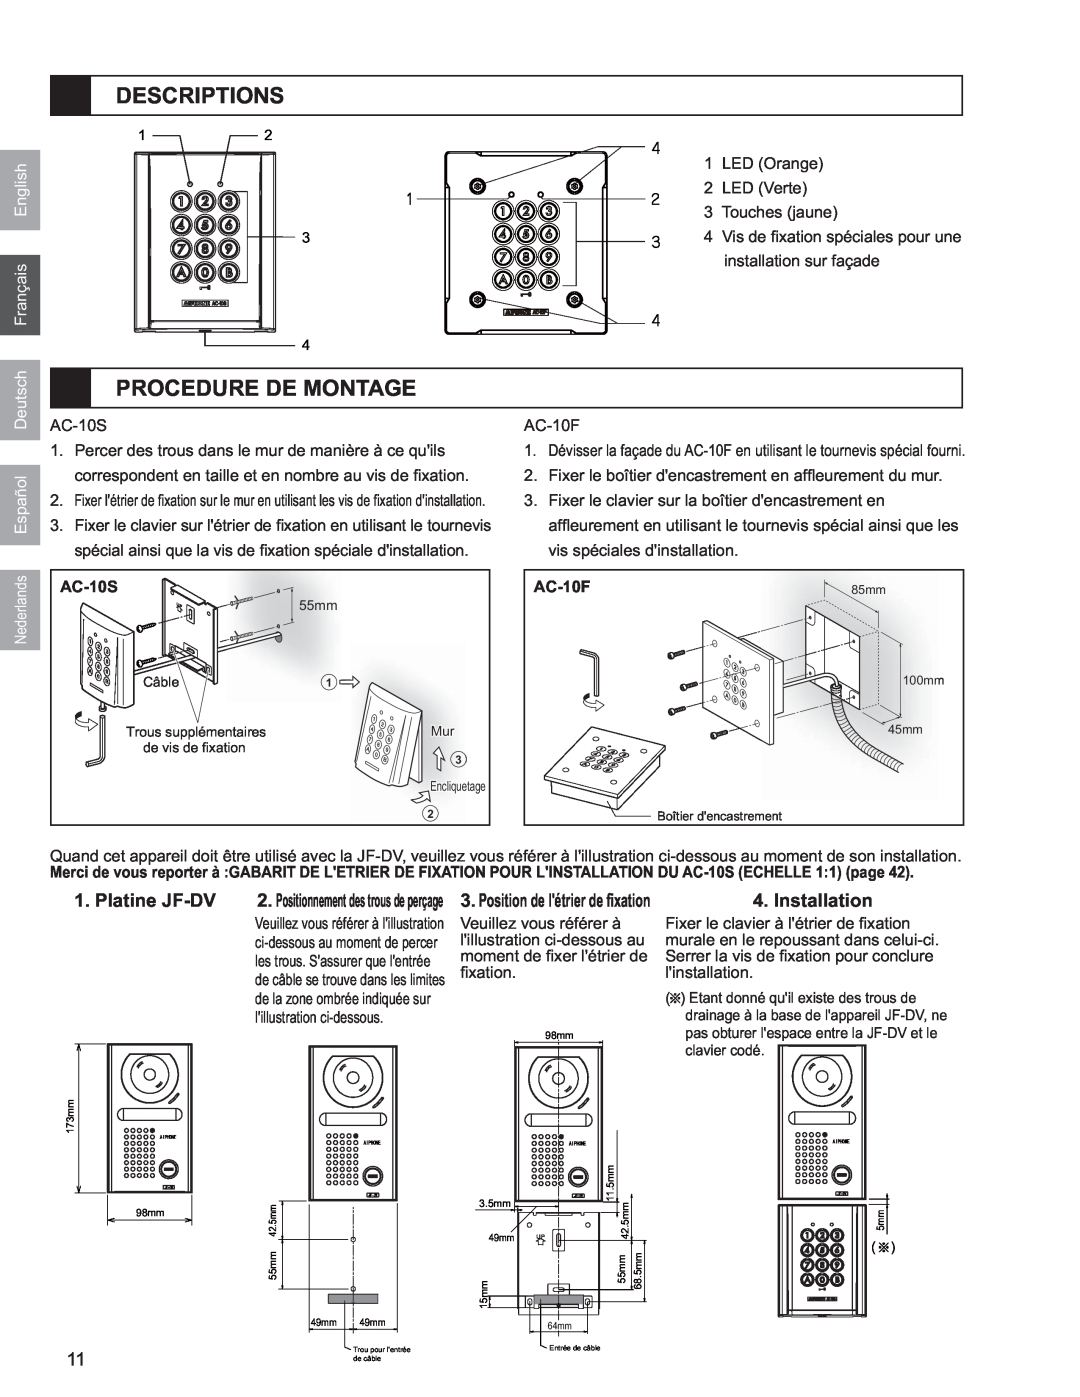 Aiphone AC-10F, AC-10S operation manual Descriptions, Procedure De Montage, Platine JF-DV, Installation, Français English 